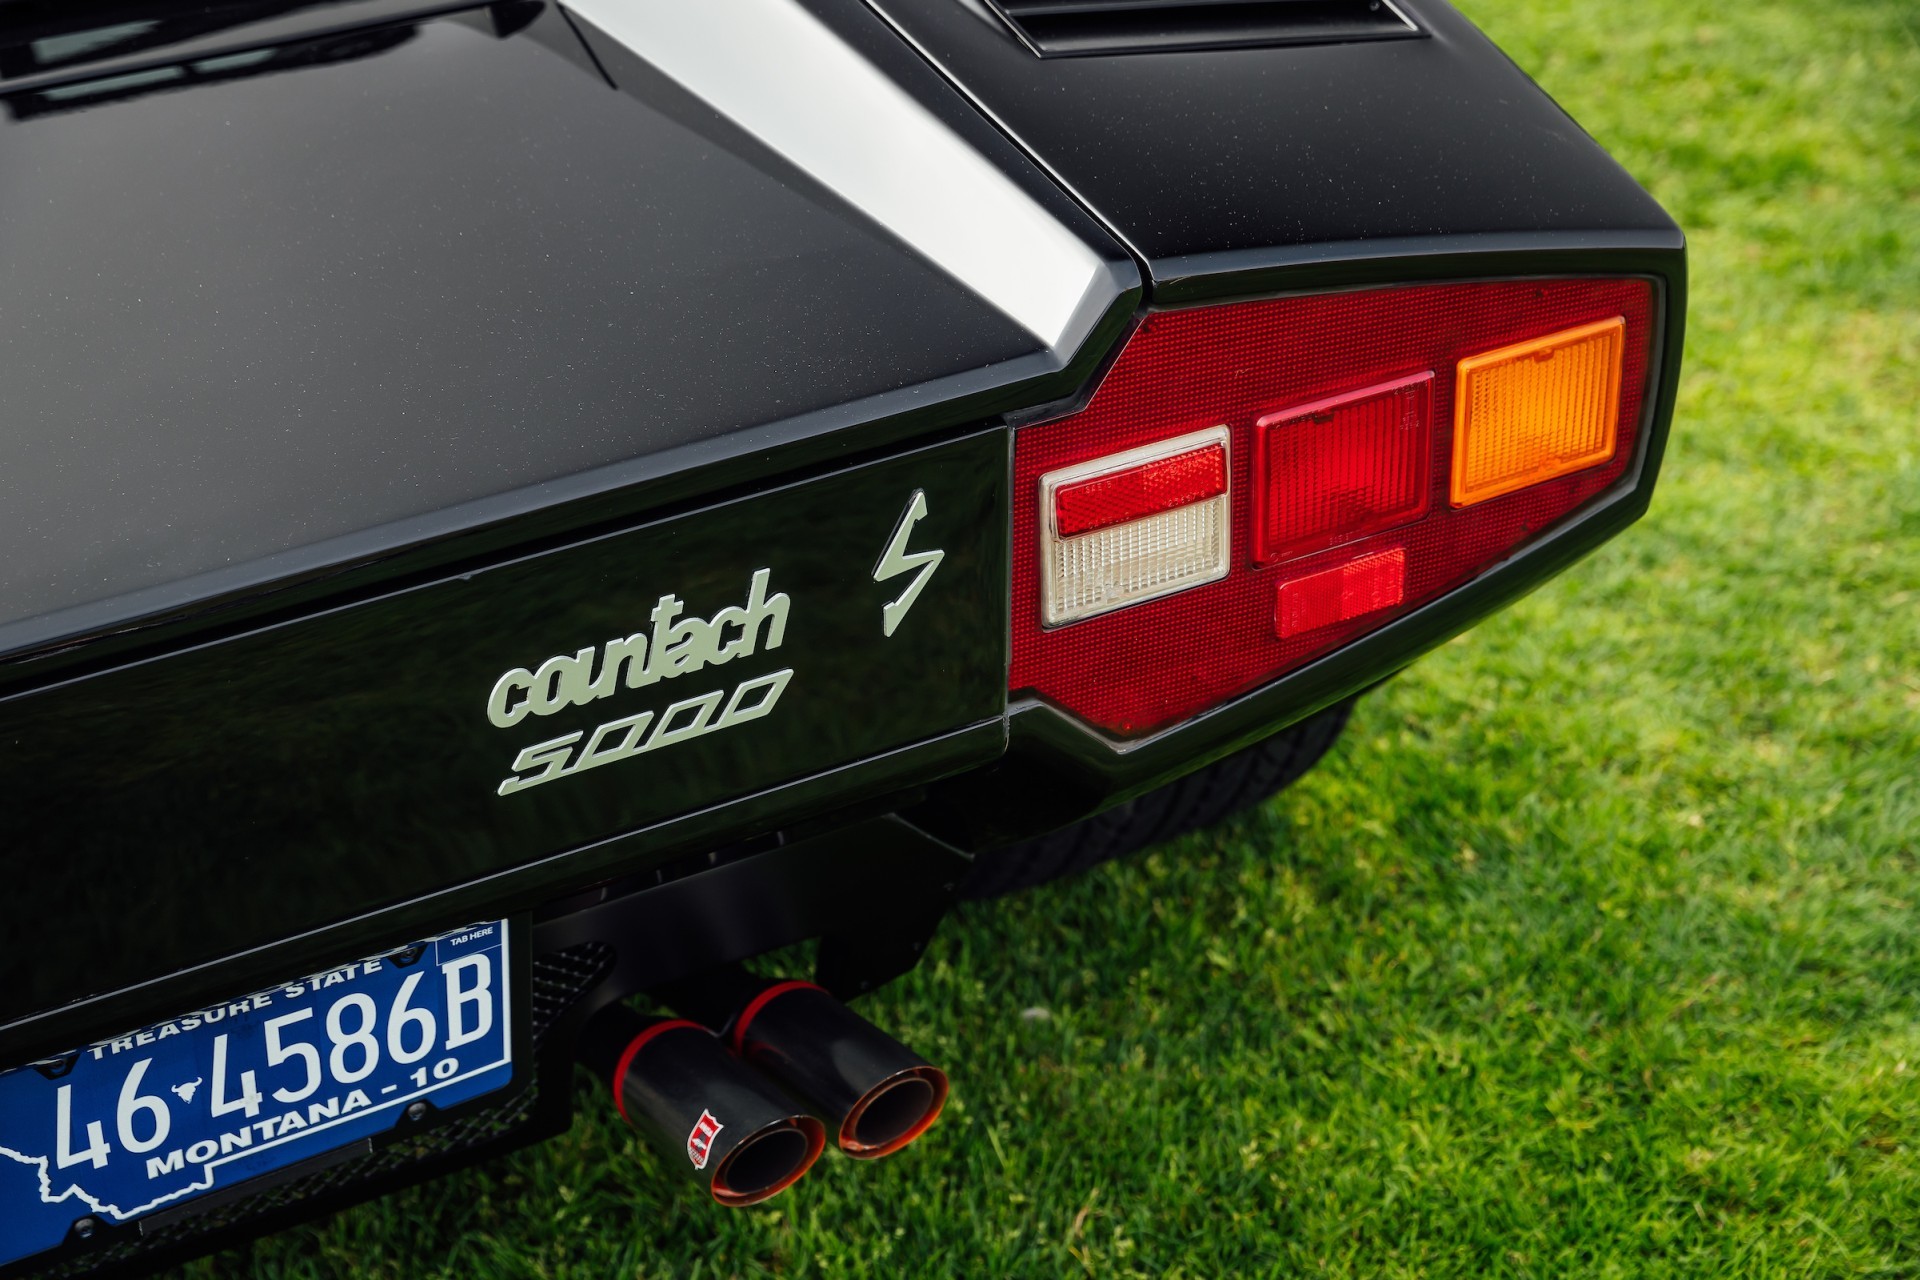 Celebrating 50 Years of the Lamborghini Countach